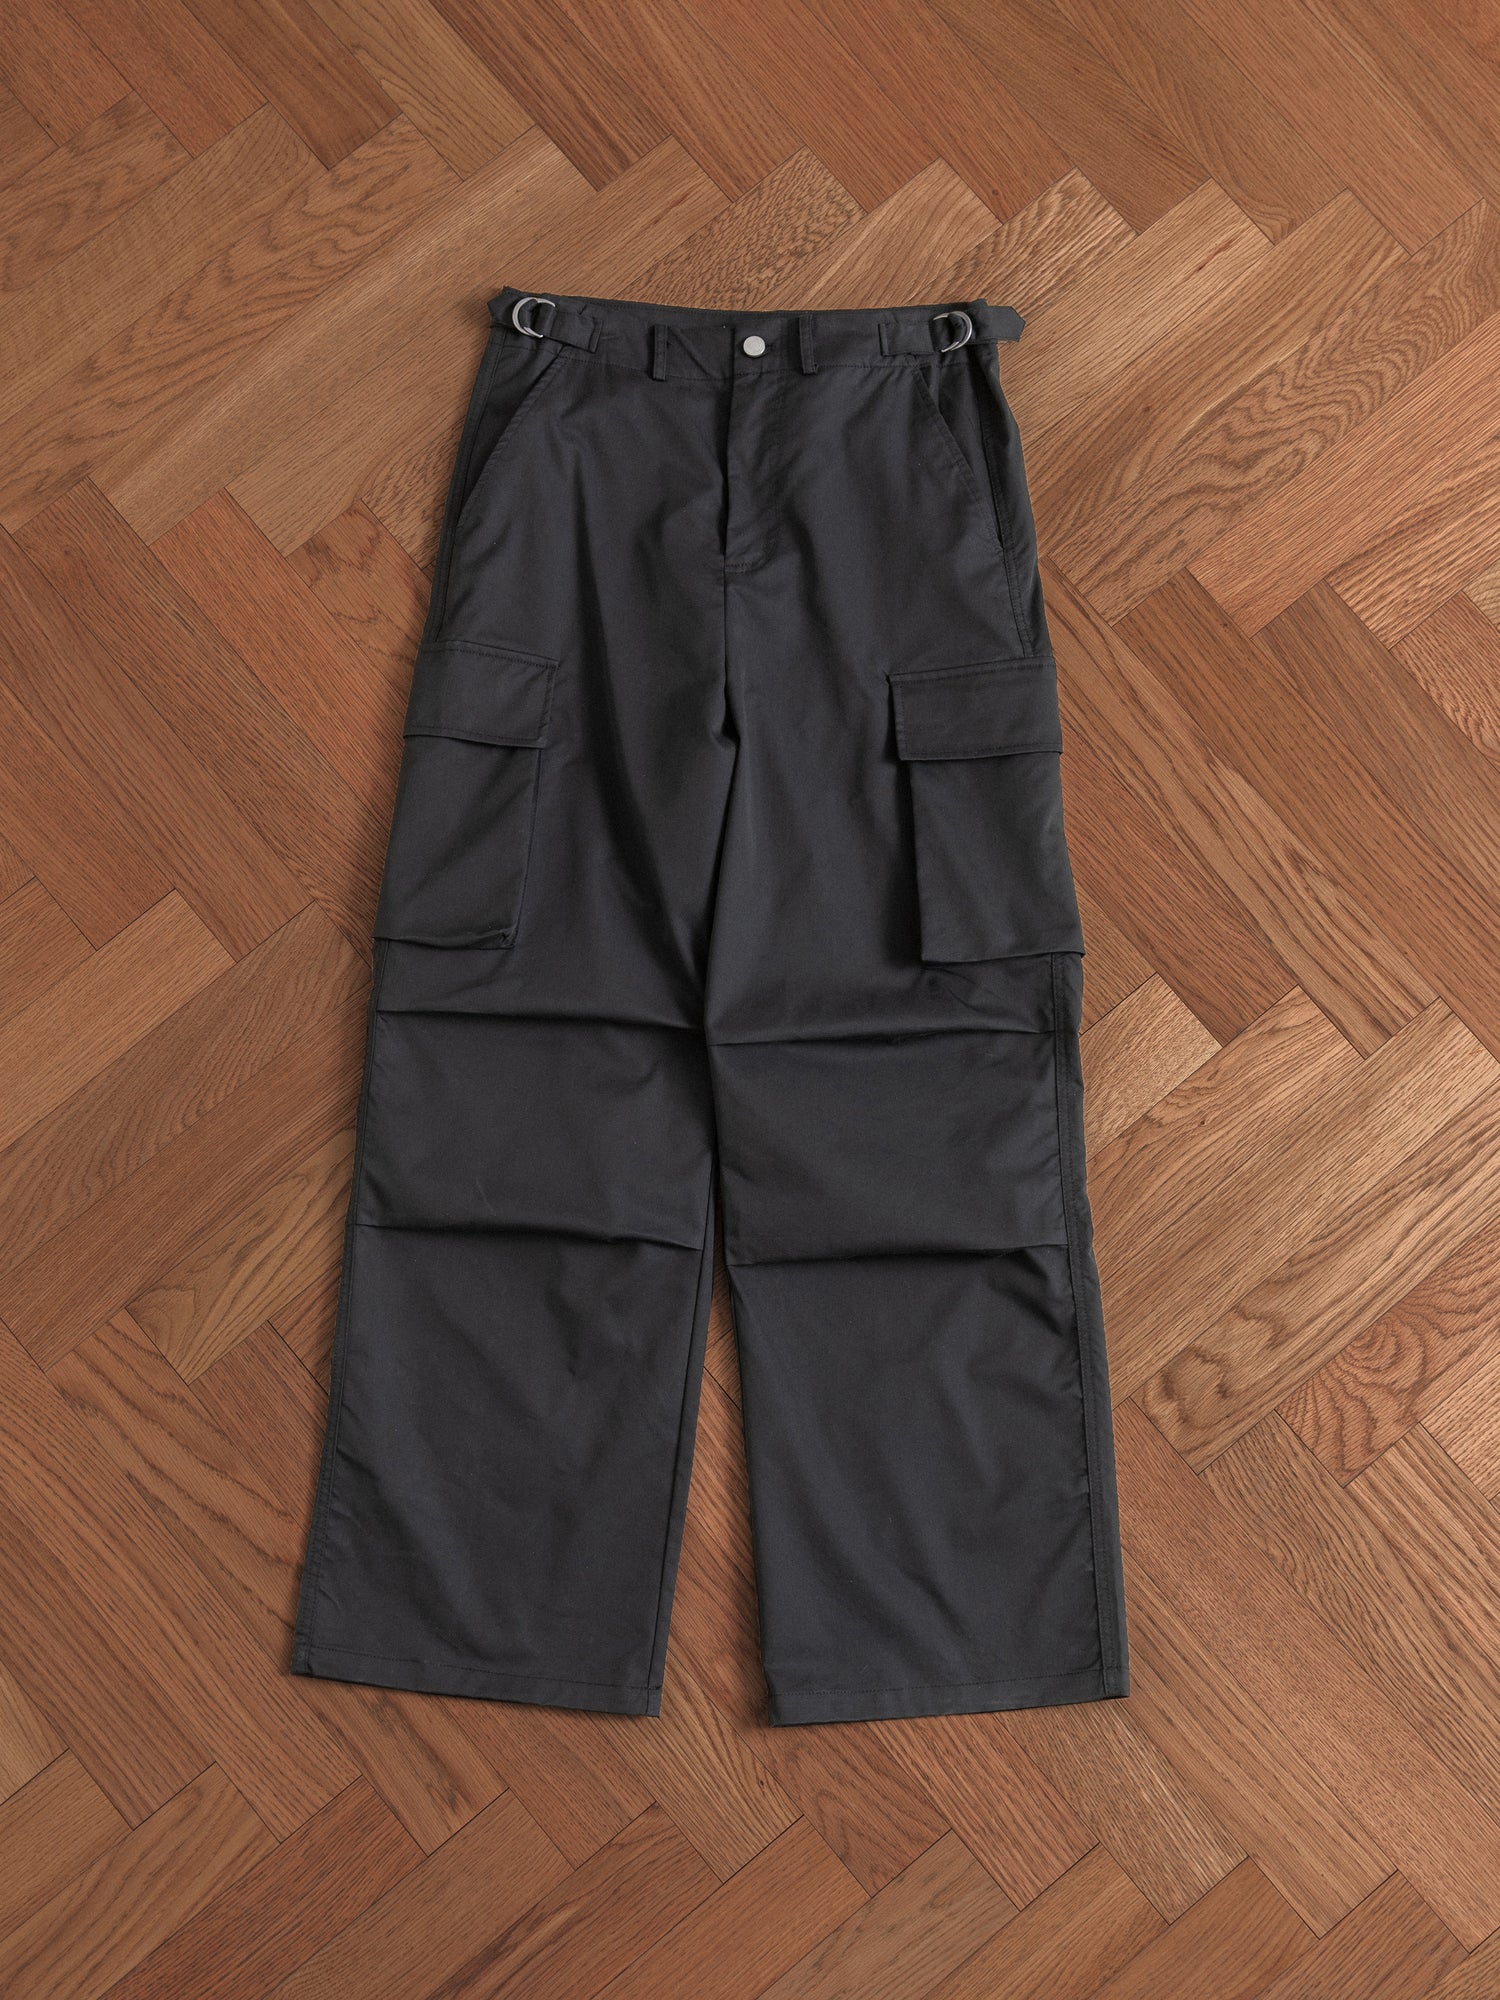 A pair of Found Elbas Cargo Pants with adjustable waist tabs on a hardwood floor.